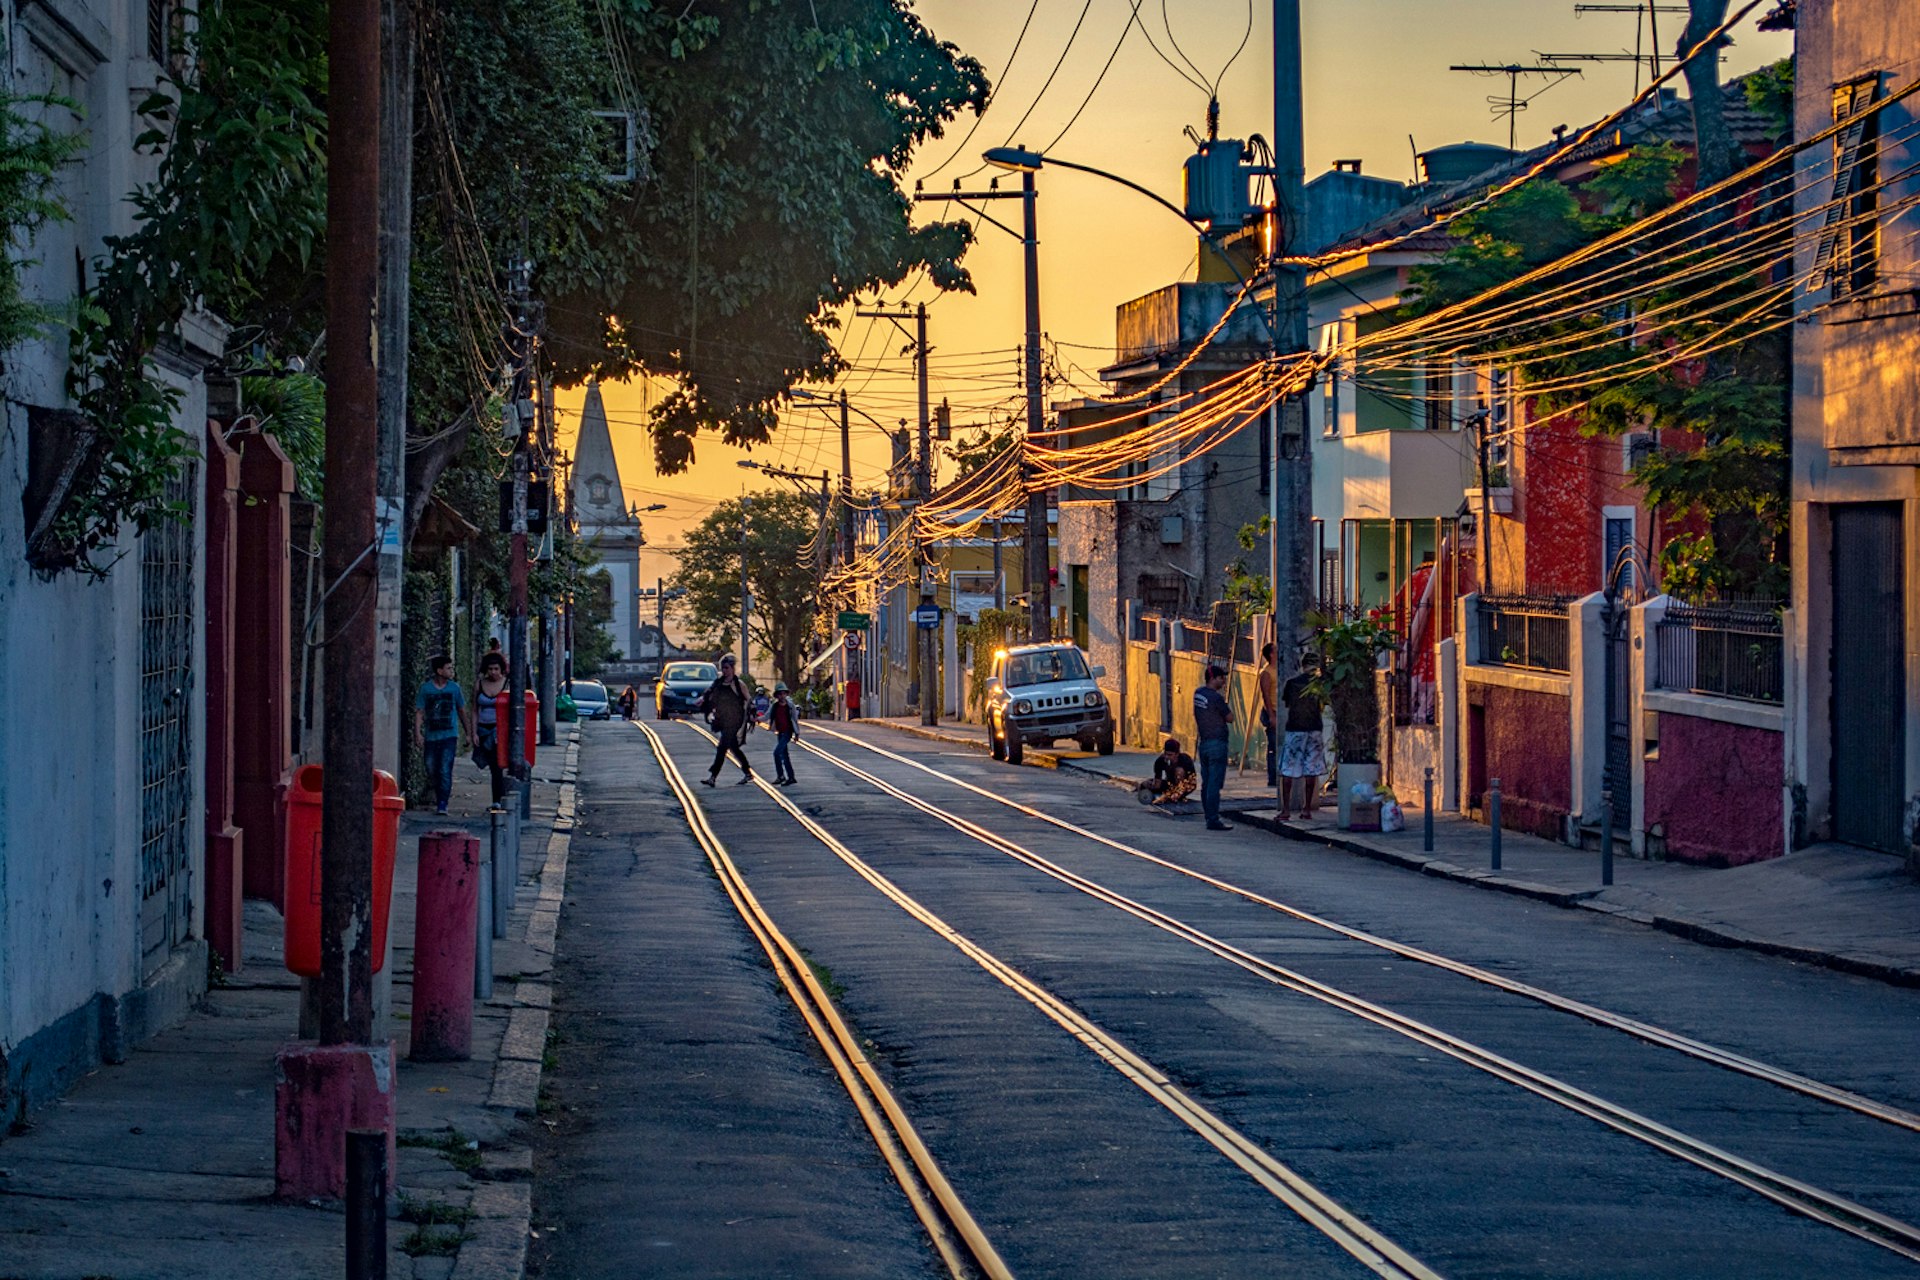 An image of a neighborhood street in Santa Teresa at sundown © Tom Le Mesurier / Lonely Planet